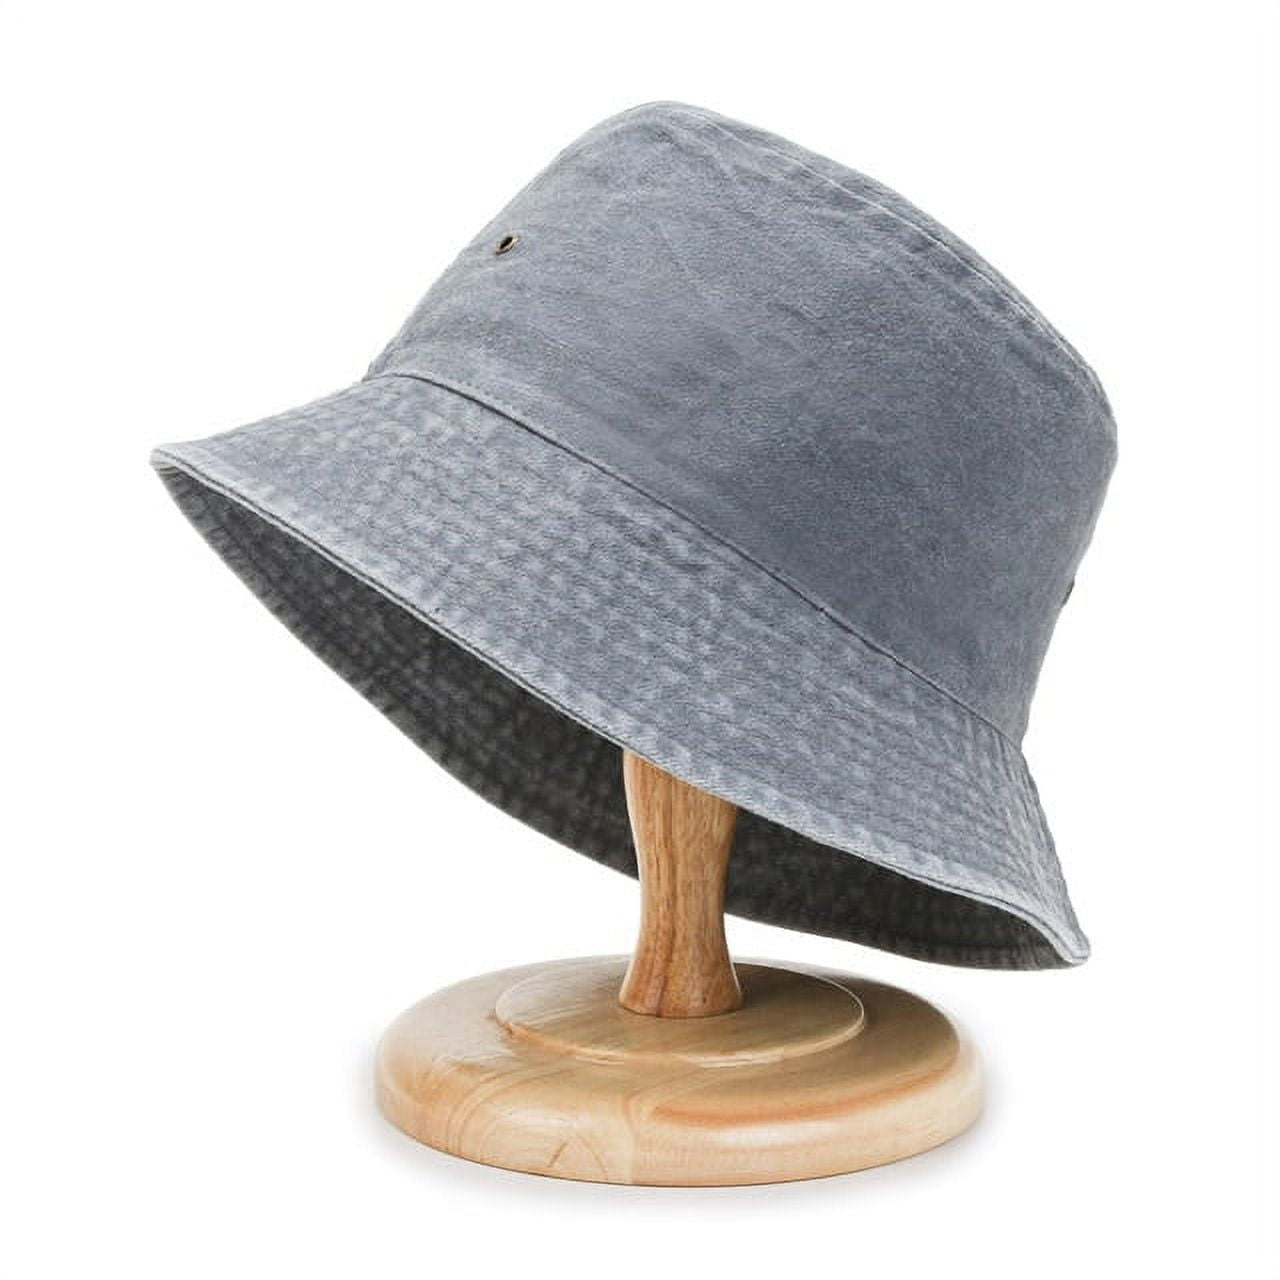 COCOpeaunt New Fashion Summer Reversible Bucket Hat Women Cotton Sun  Protection Fisherman Cap Panama Hat Bob Gorro Pescador Hat Present